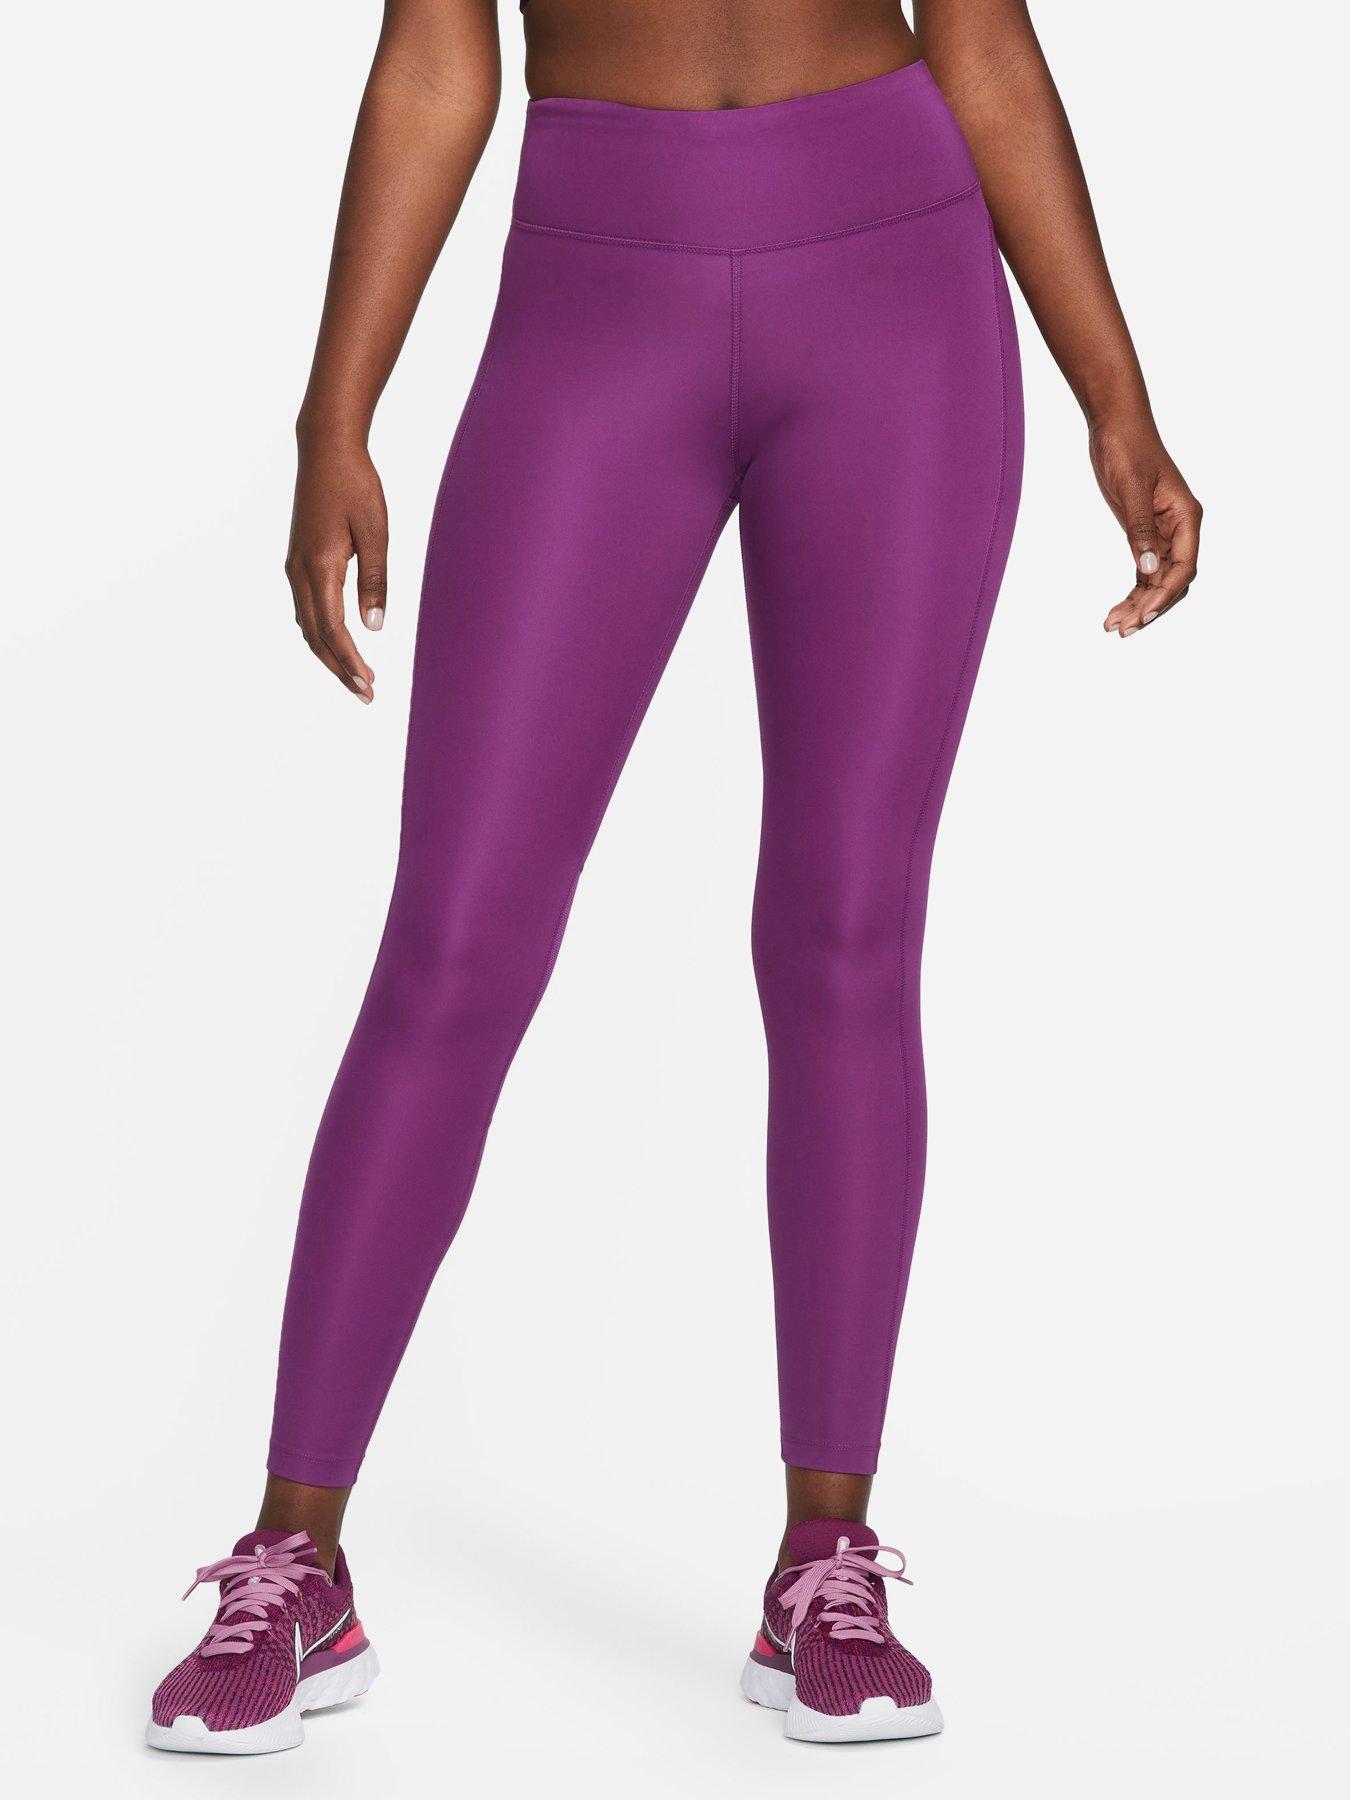 Nike Performance 365 - Leggings - purple cosmos/white/dark purple